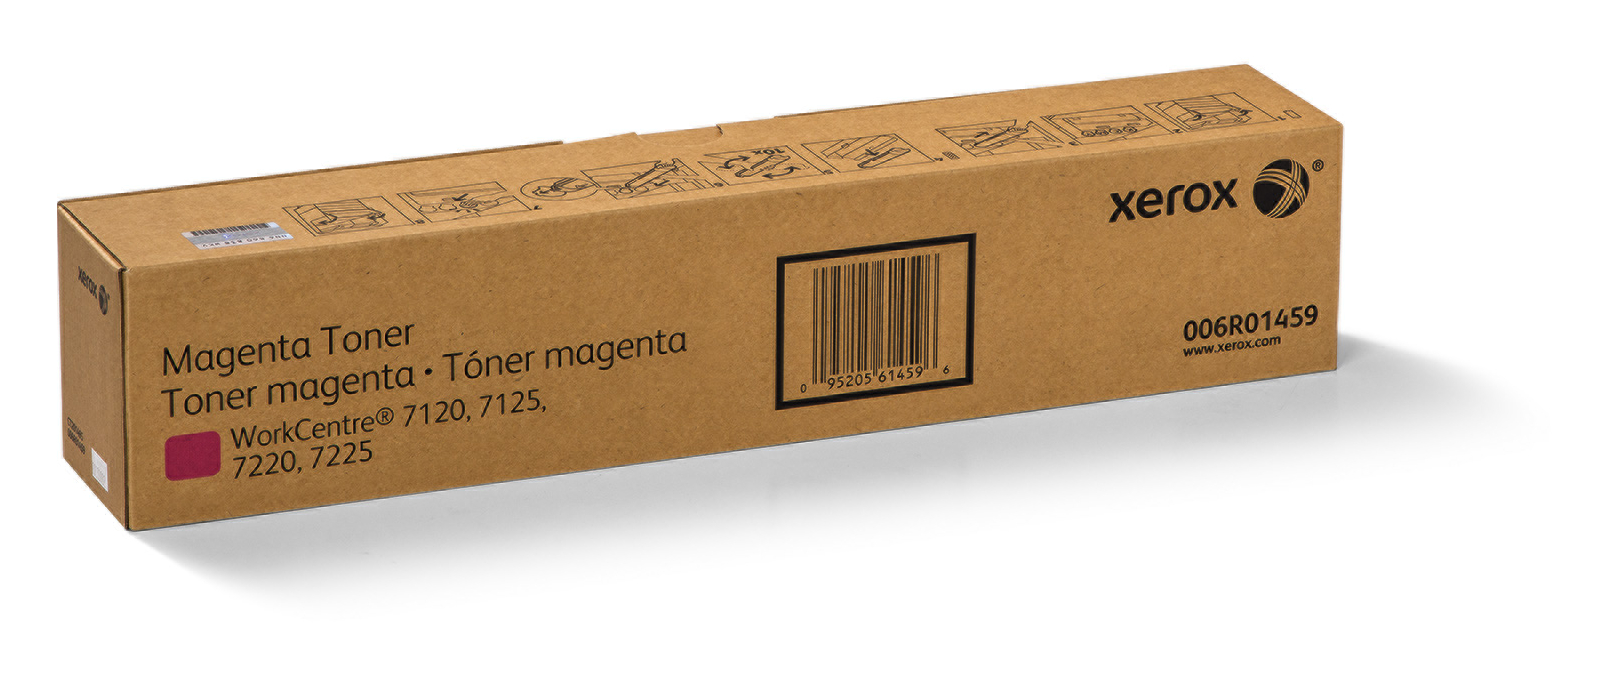 Magenta Toner Cartridge NA/ESG (Sold) 006R01459 Genuine Xerox Supplies